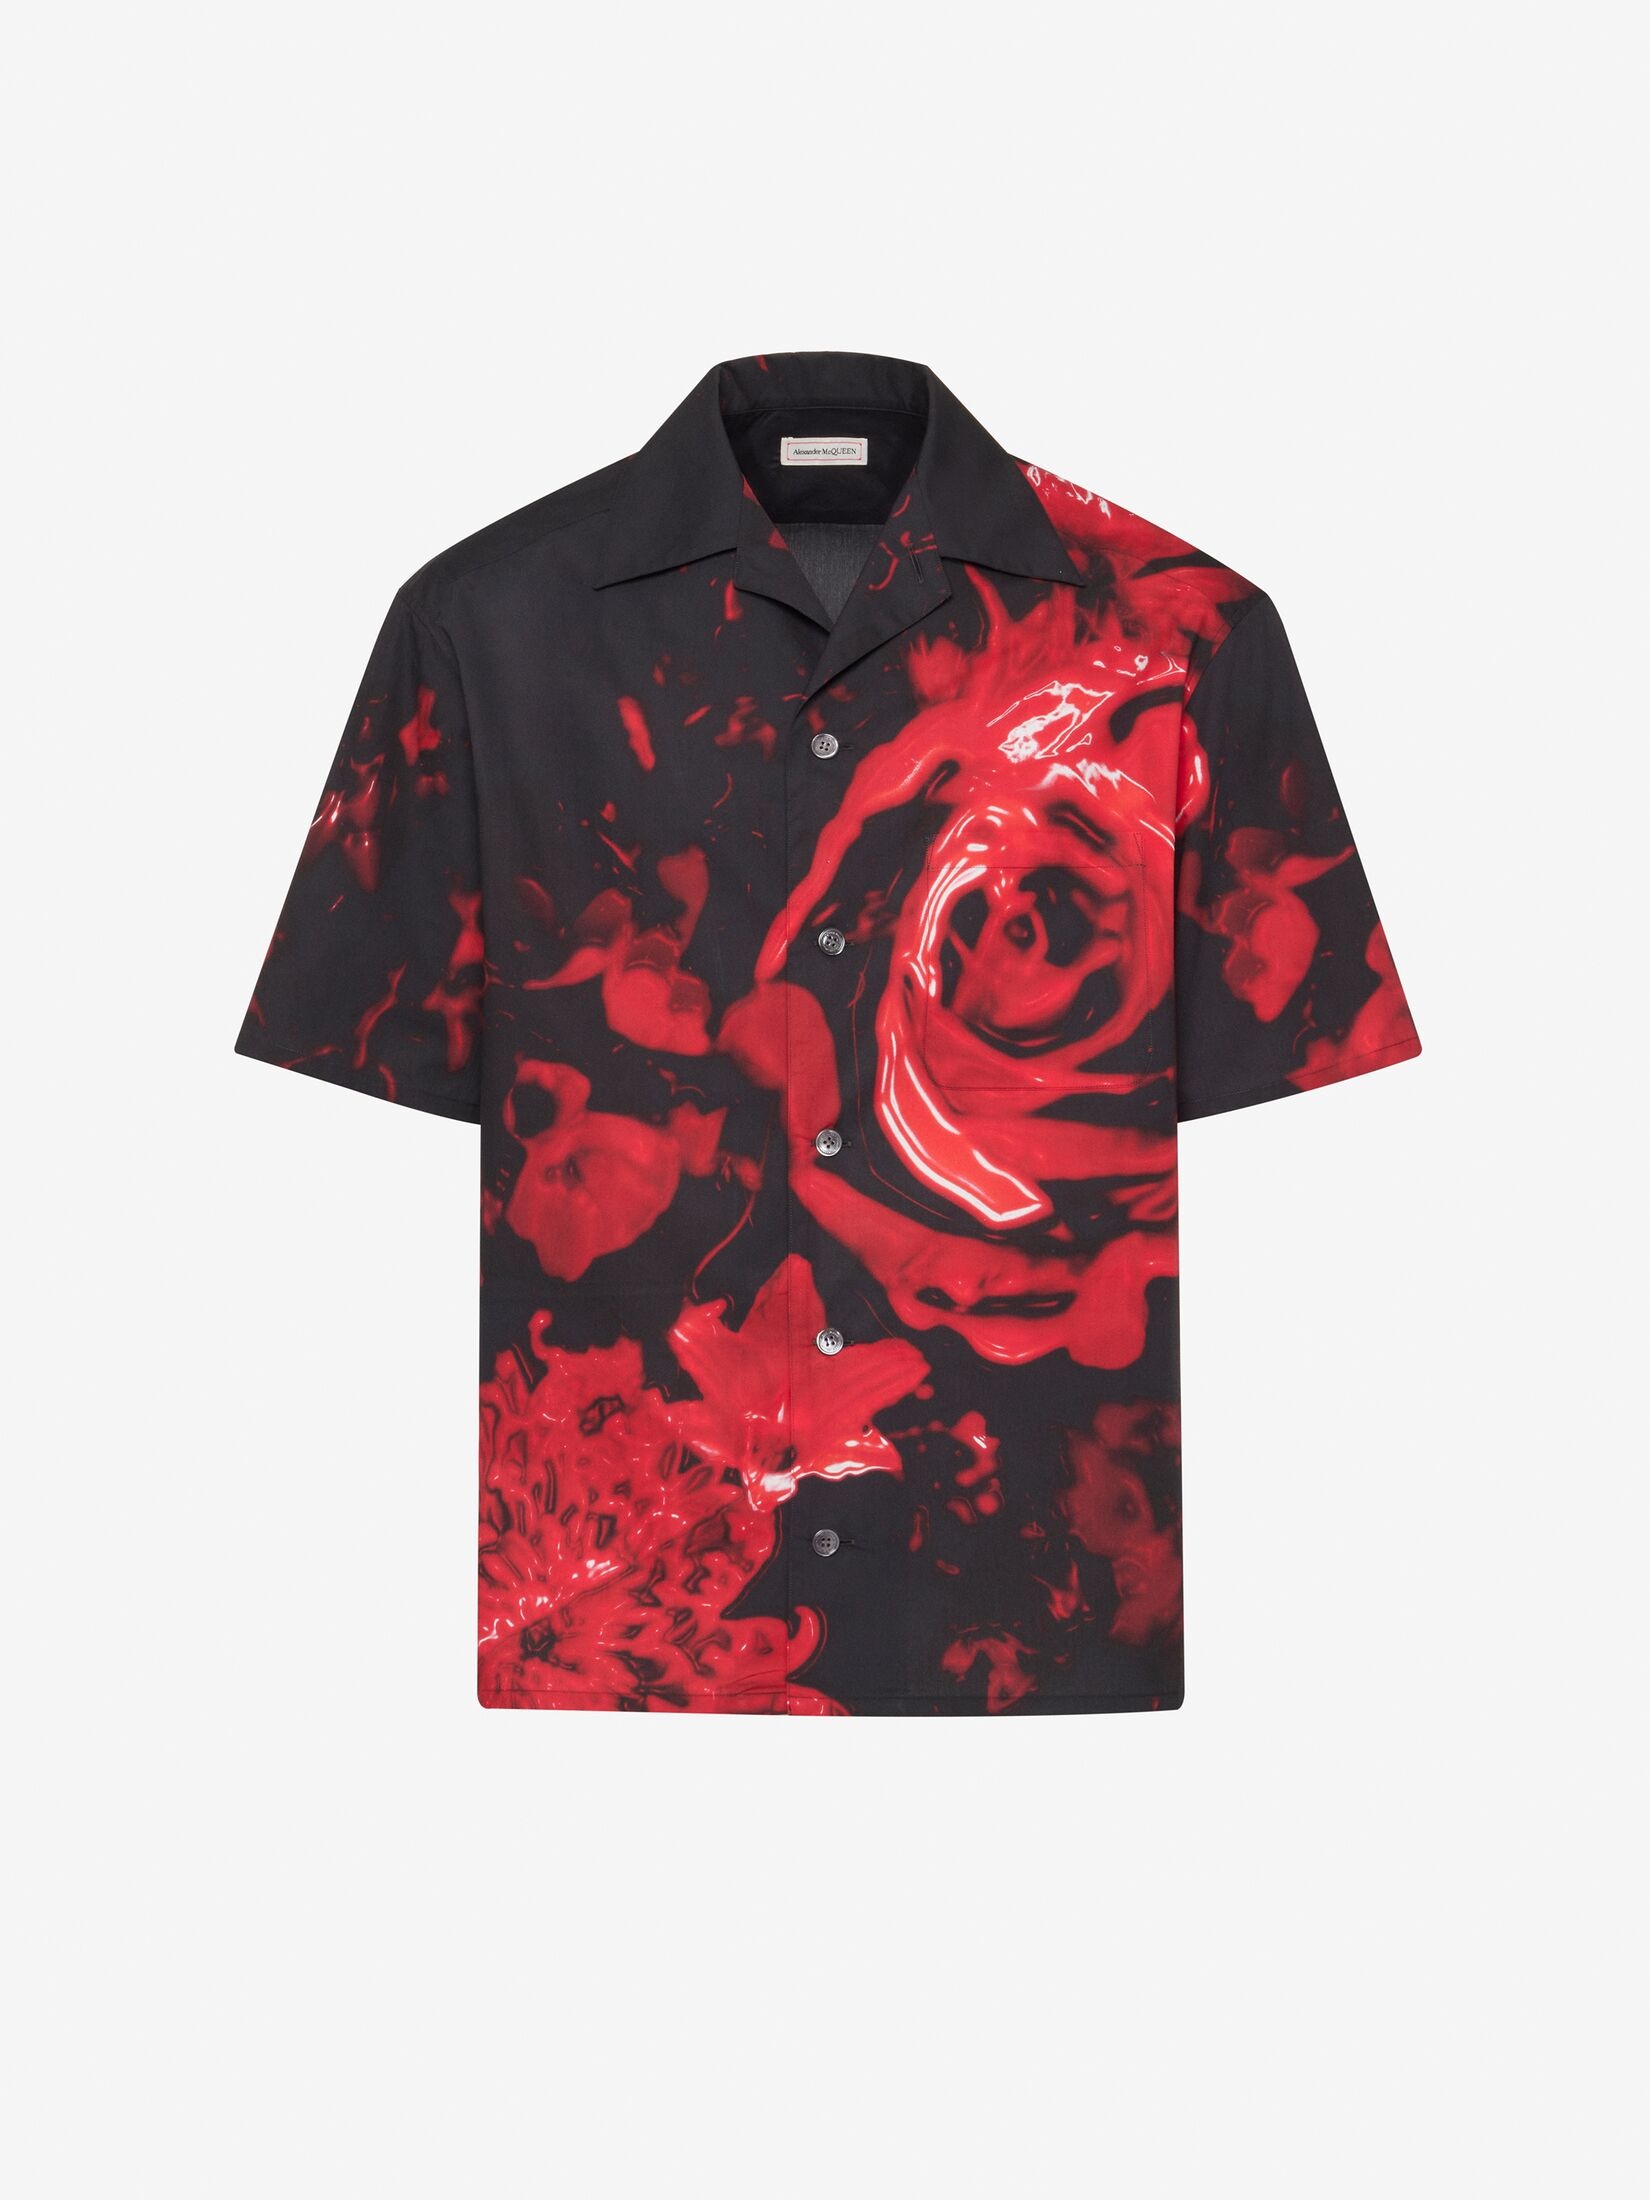 Men's Wax Flower Hawaiian Shirt in Black/red - 2